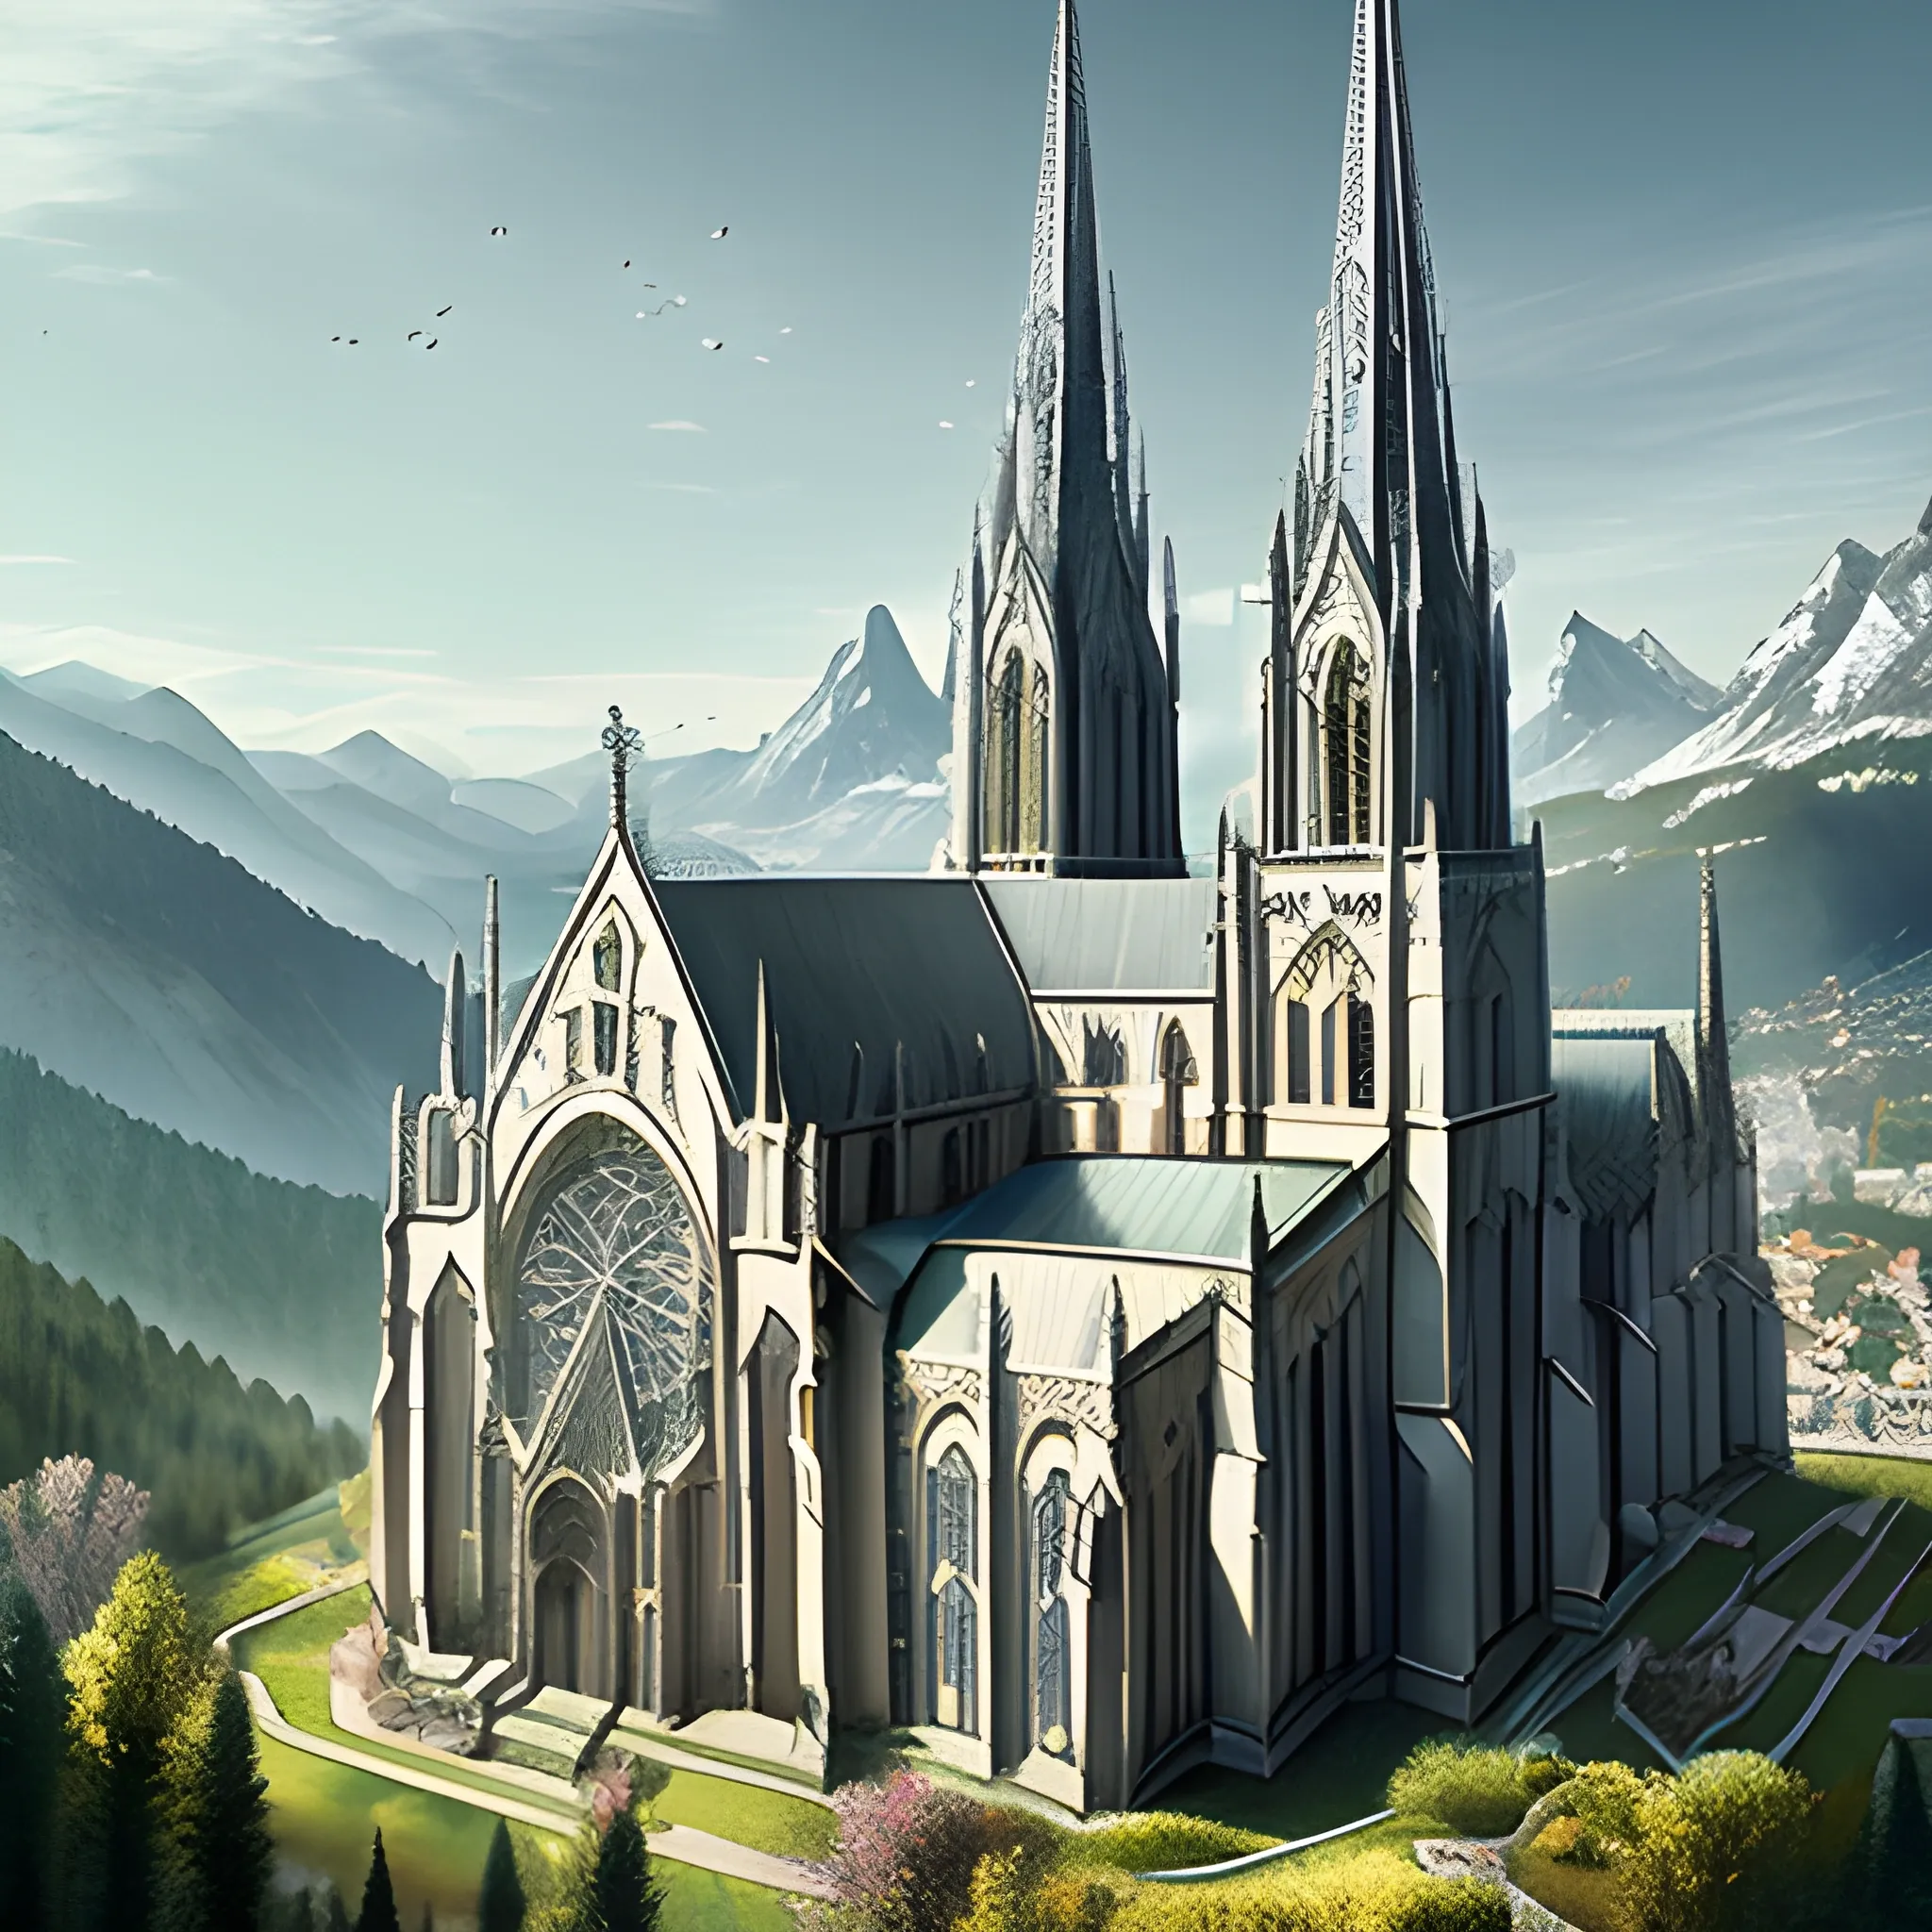 Cathédrale in an bigest elven city in the mountains, elegant, sunny, impressive, high-detail, digital art